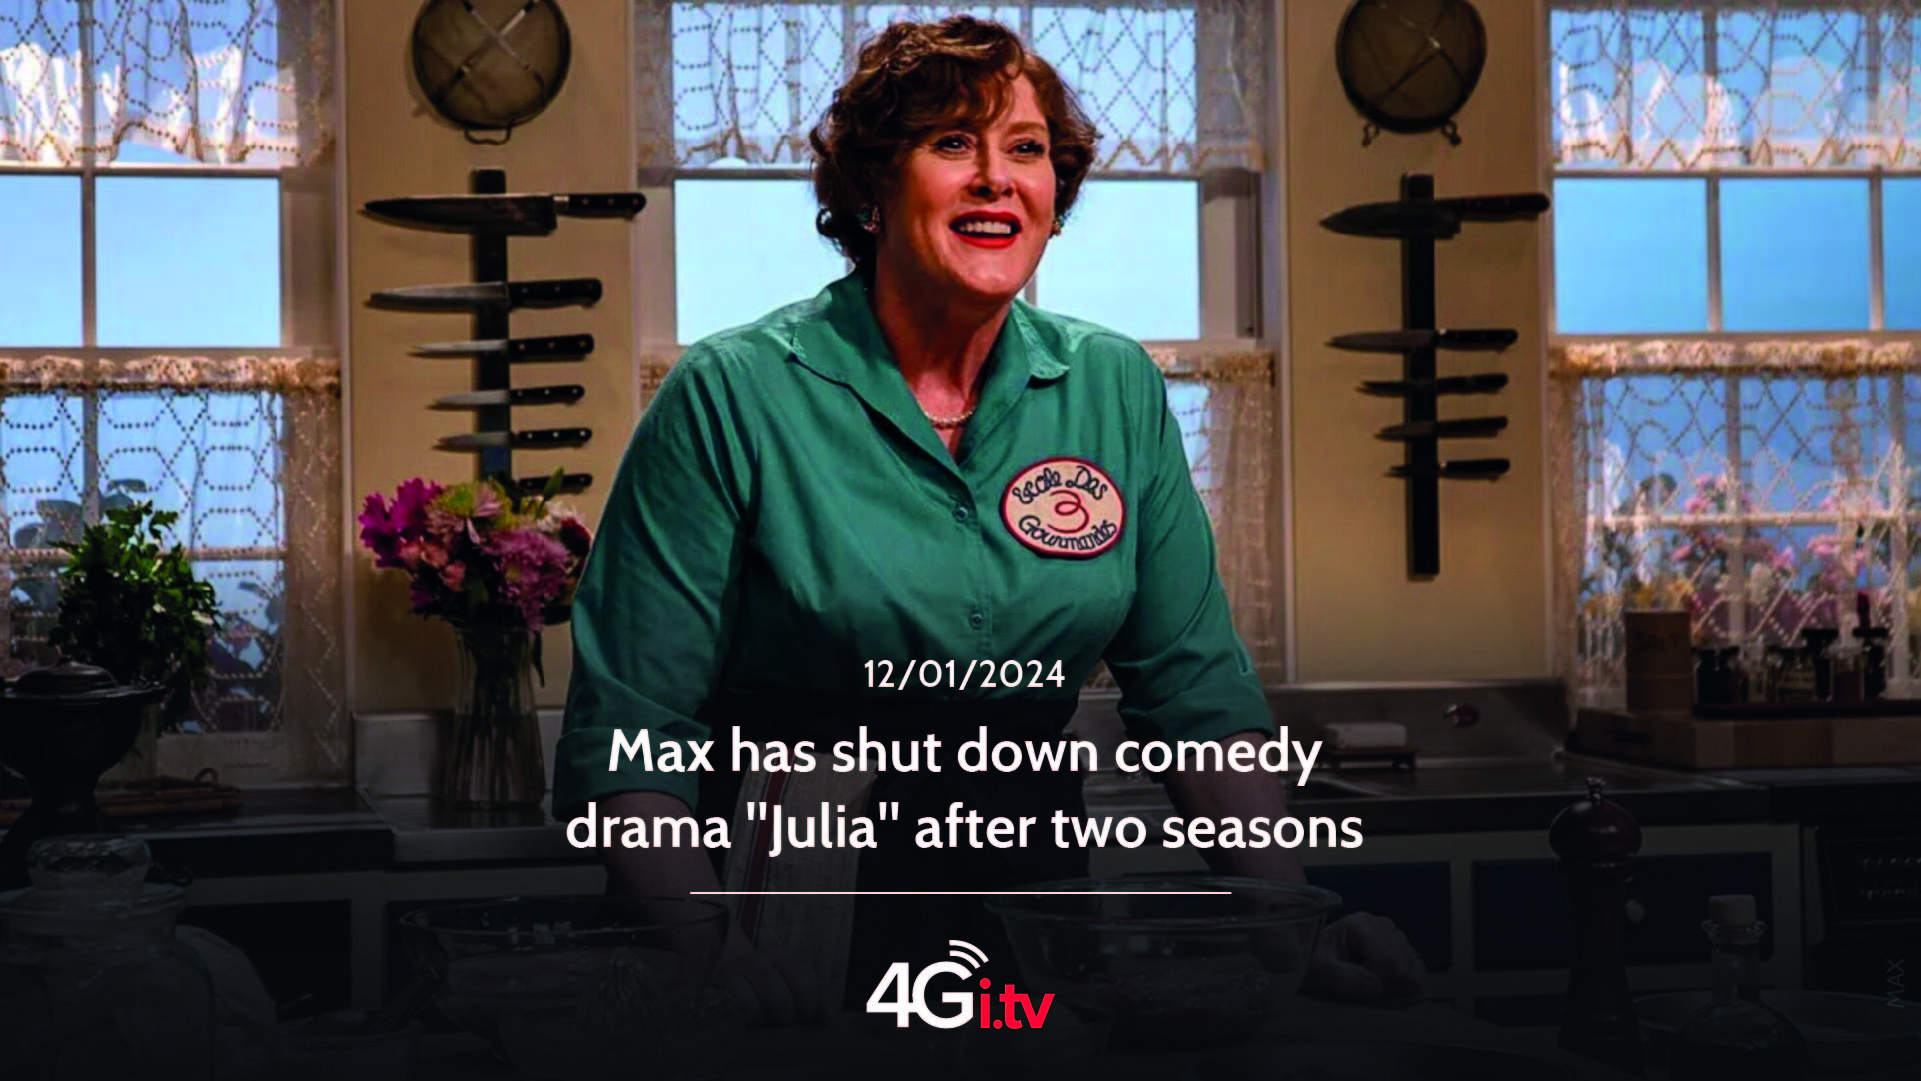 Подробнее о статье Max has shut down comedy drama “Julia” after two seasons 